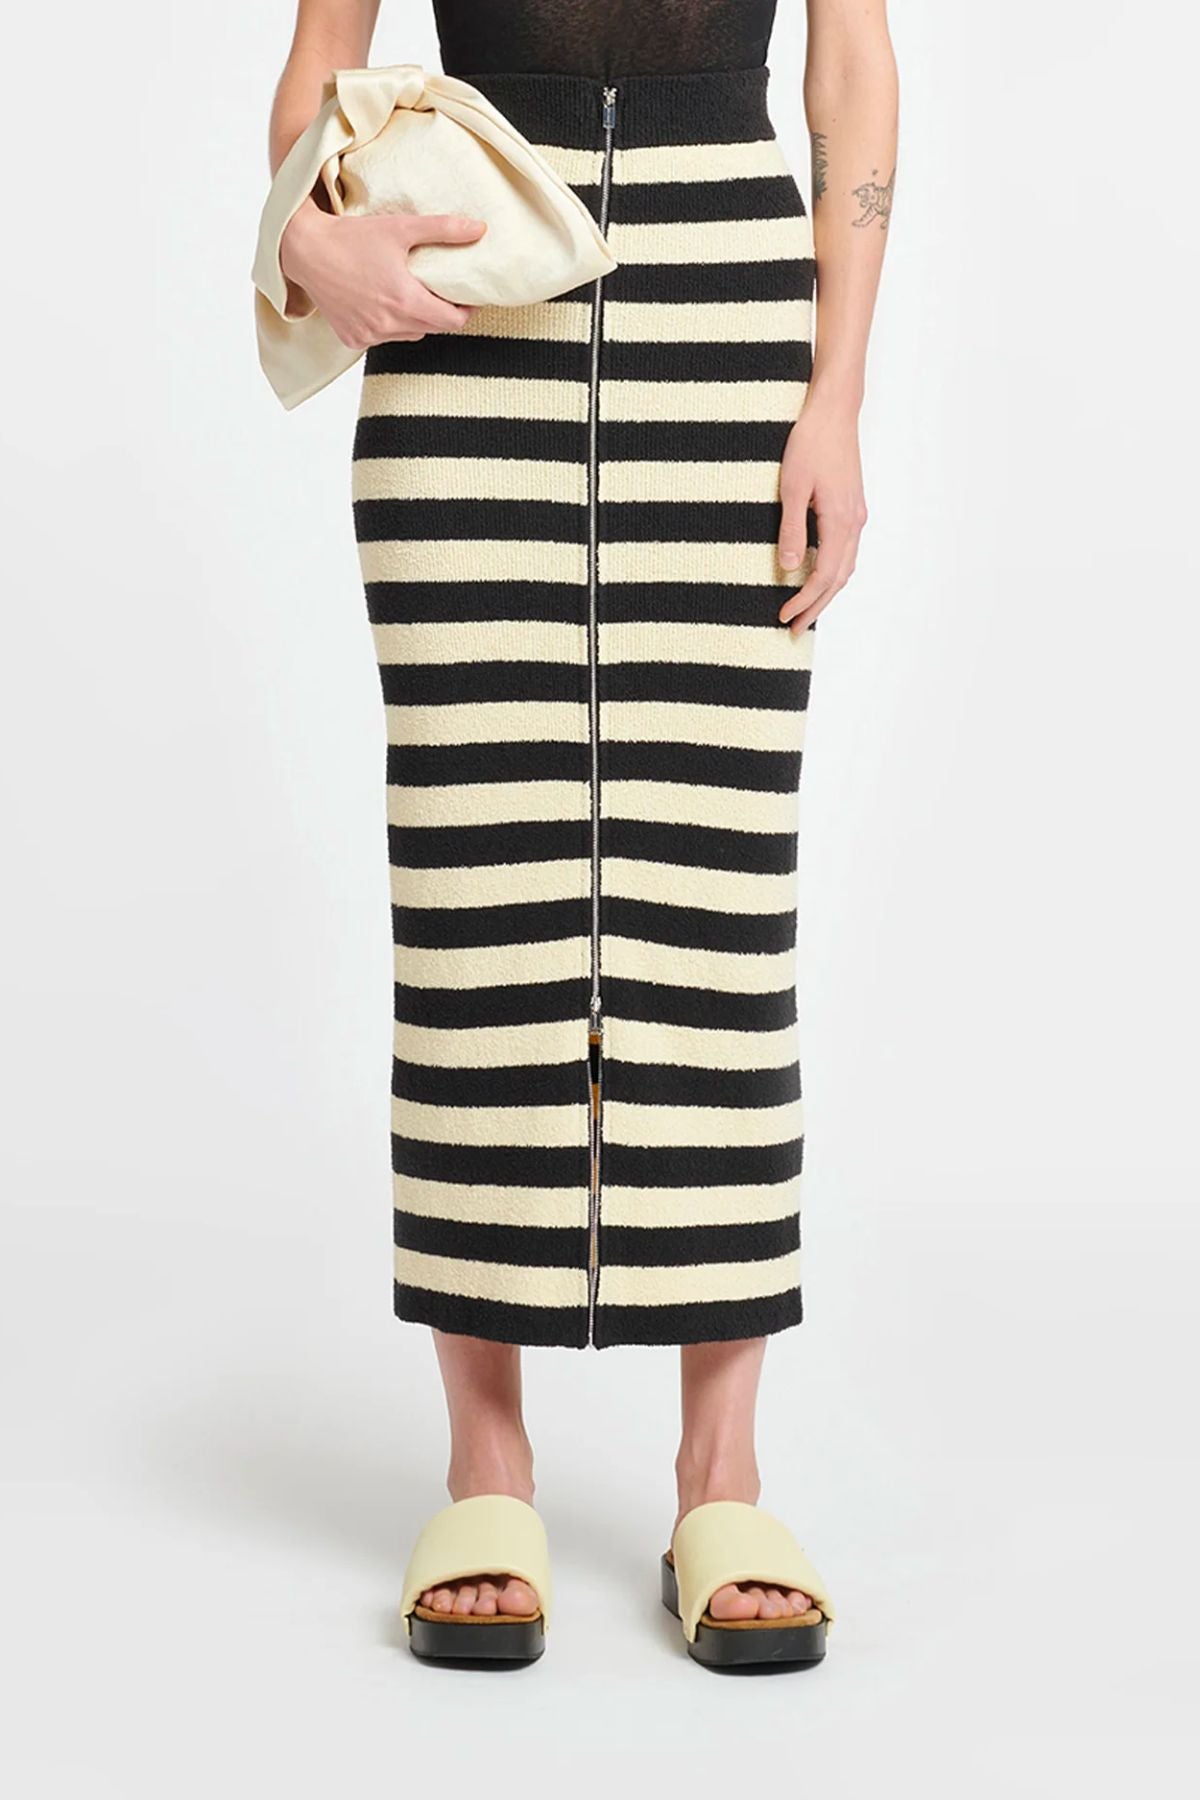 Nanushka Nima Striped Terry Knit Skirt - Creme/Off Blk